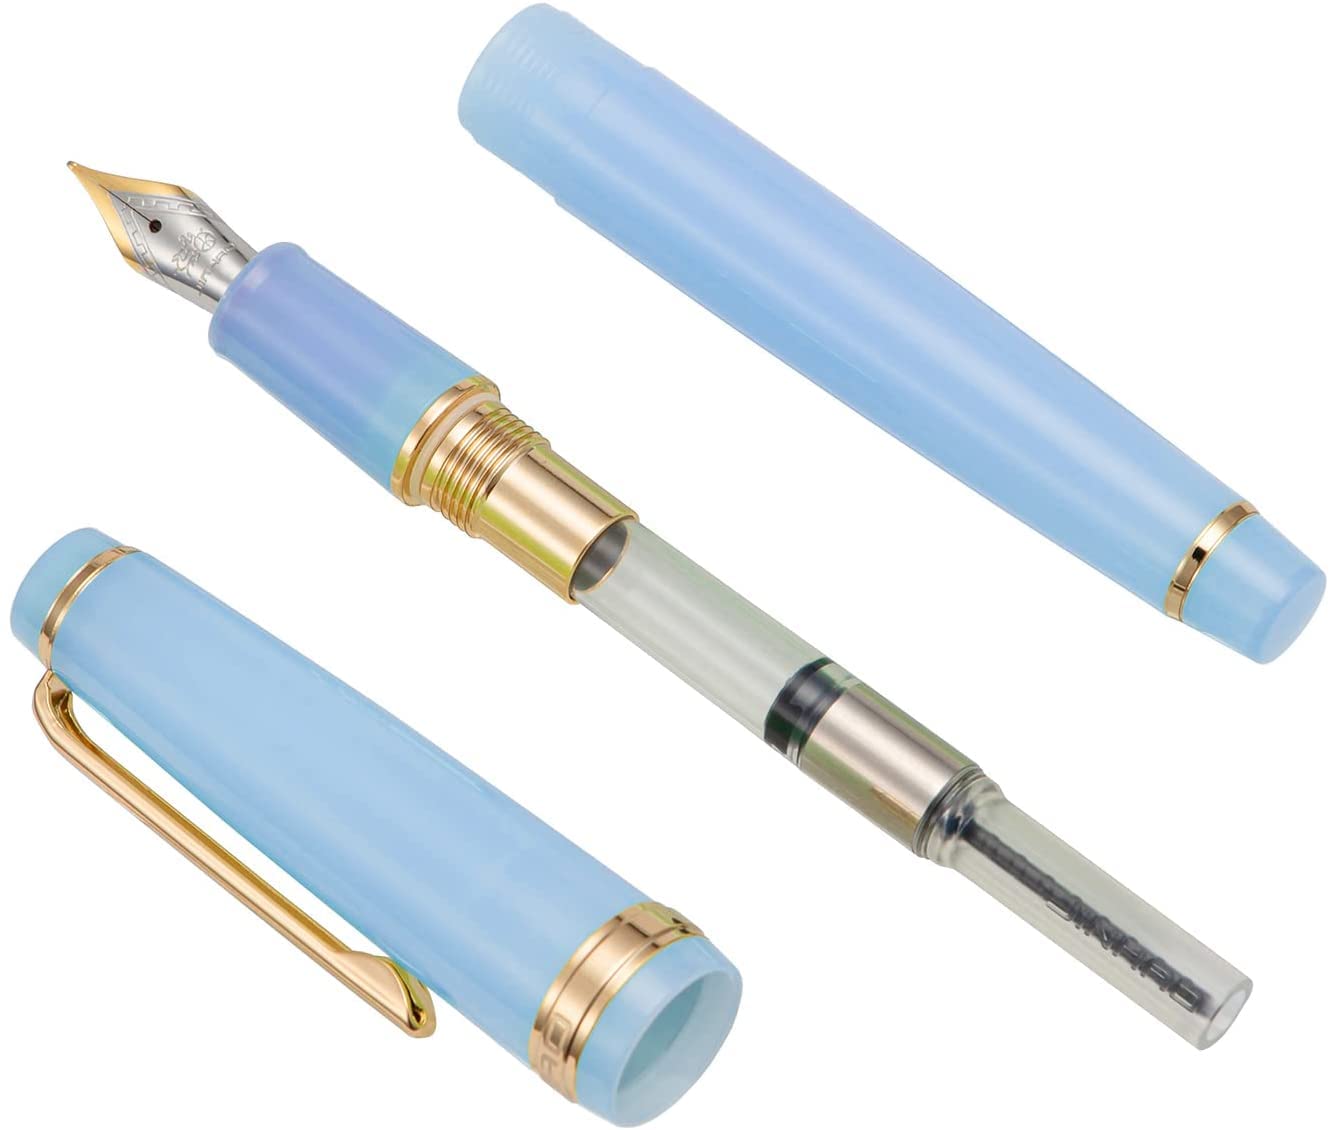 Jinhao 82 Translucent Colors w/ Gold Trim Fountain Pen